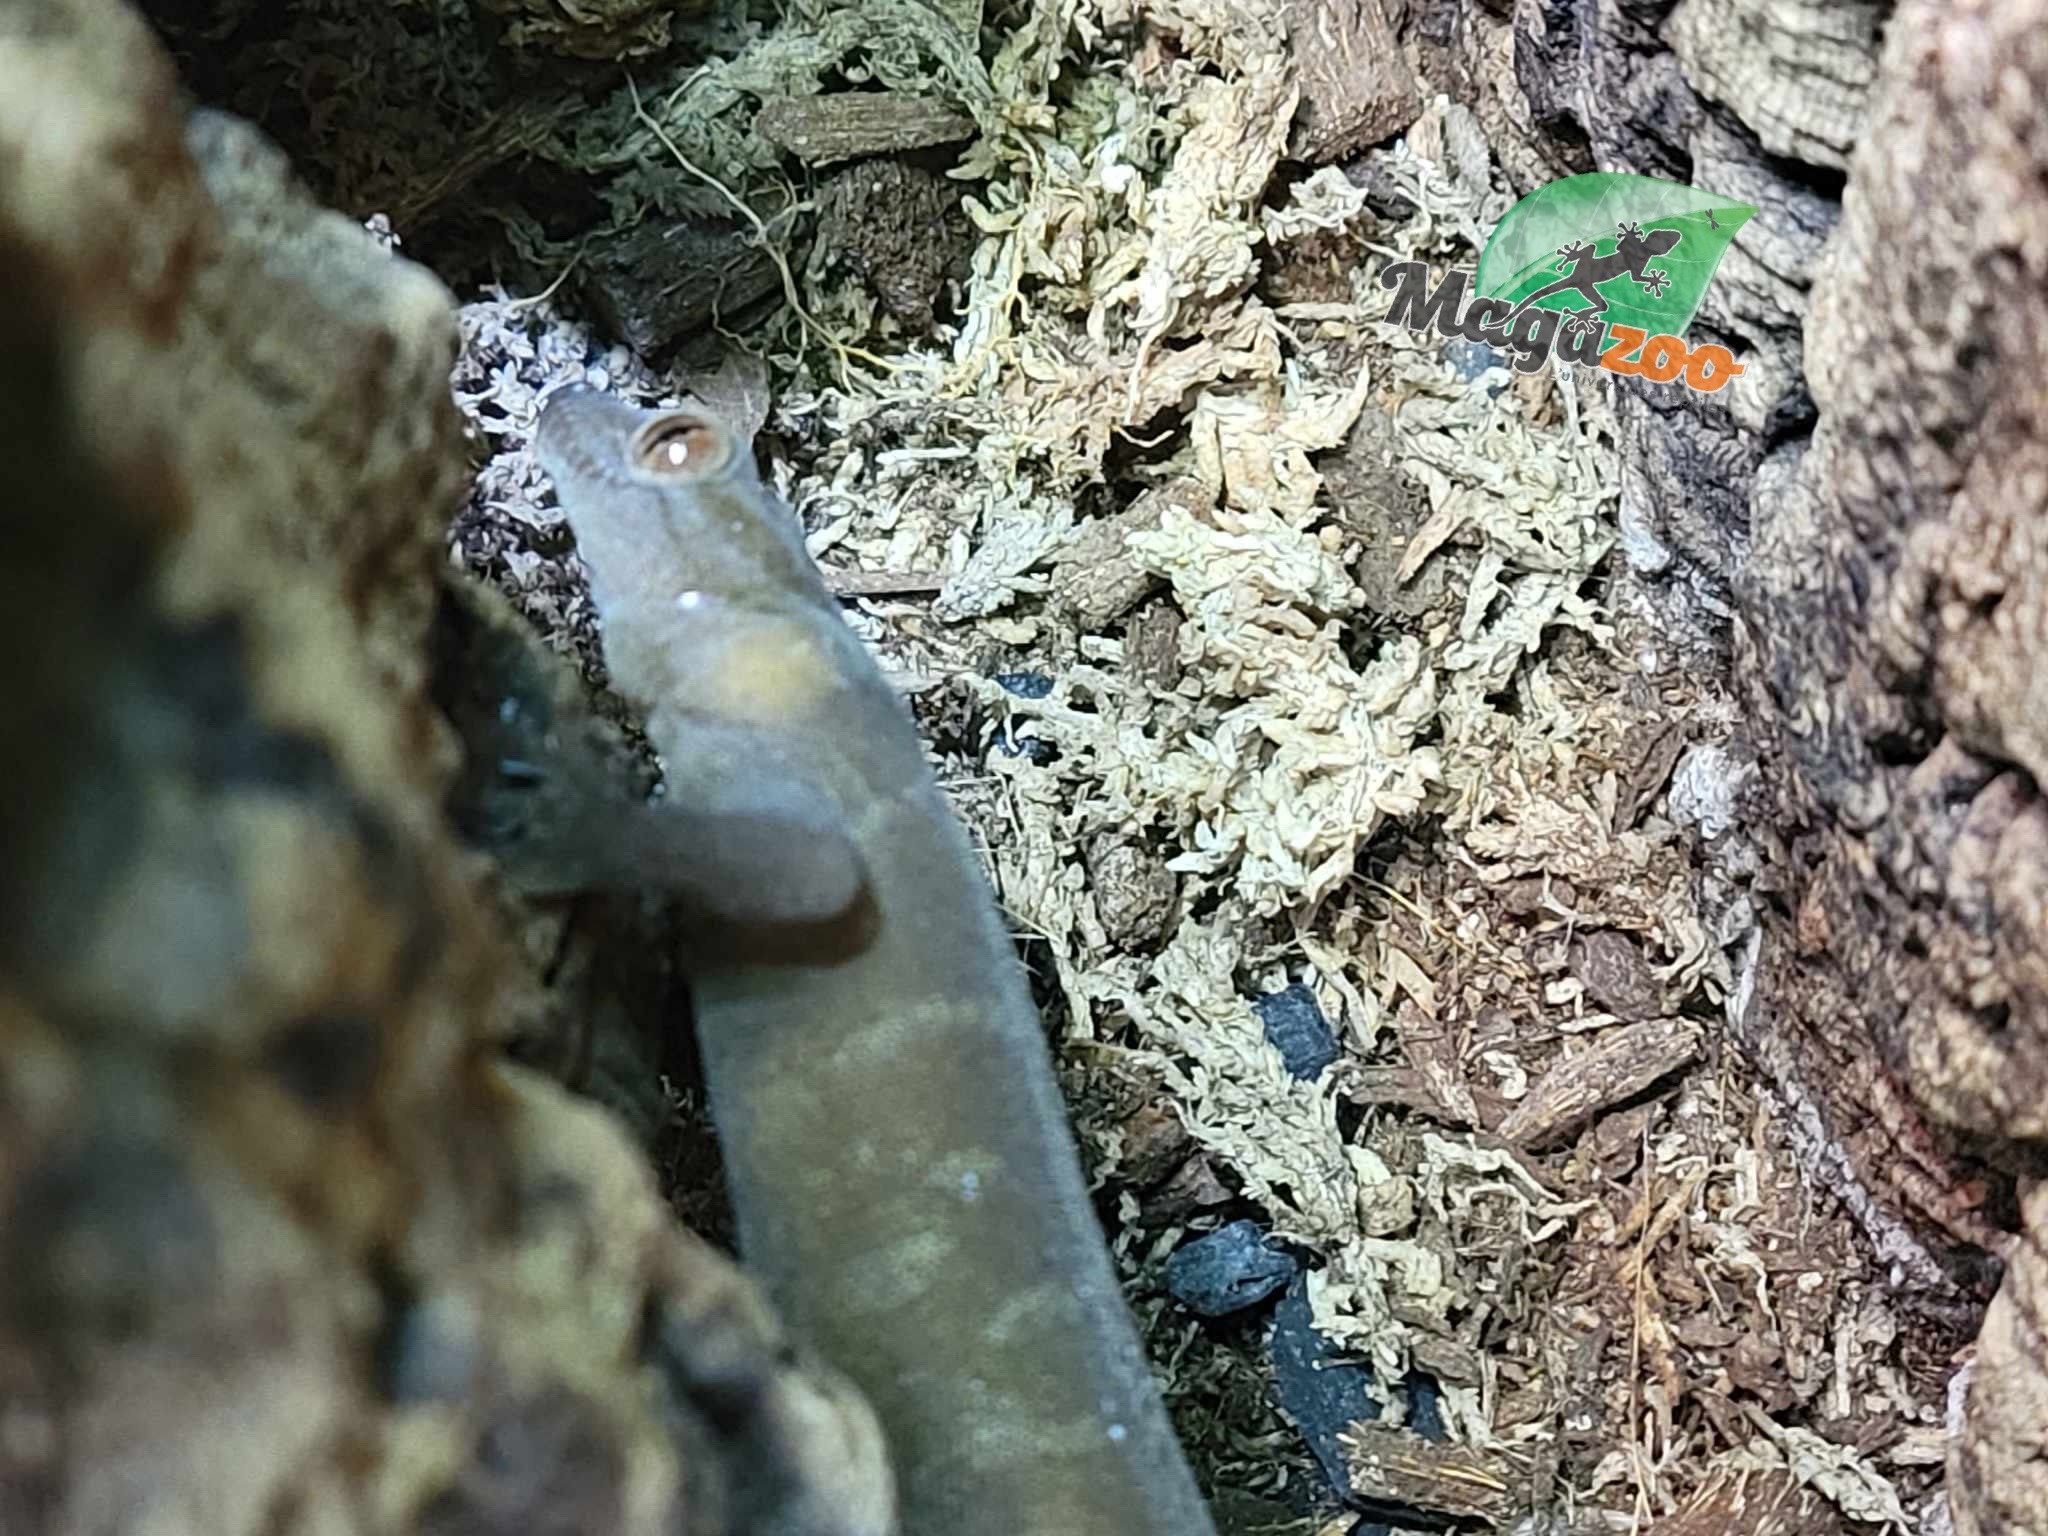 Magazoo Captive born Junevile Female Indo yellow gecko